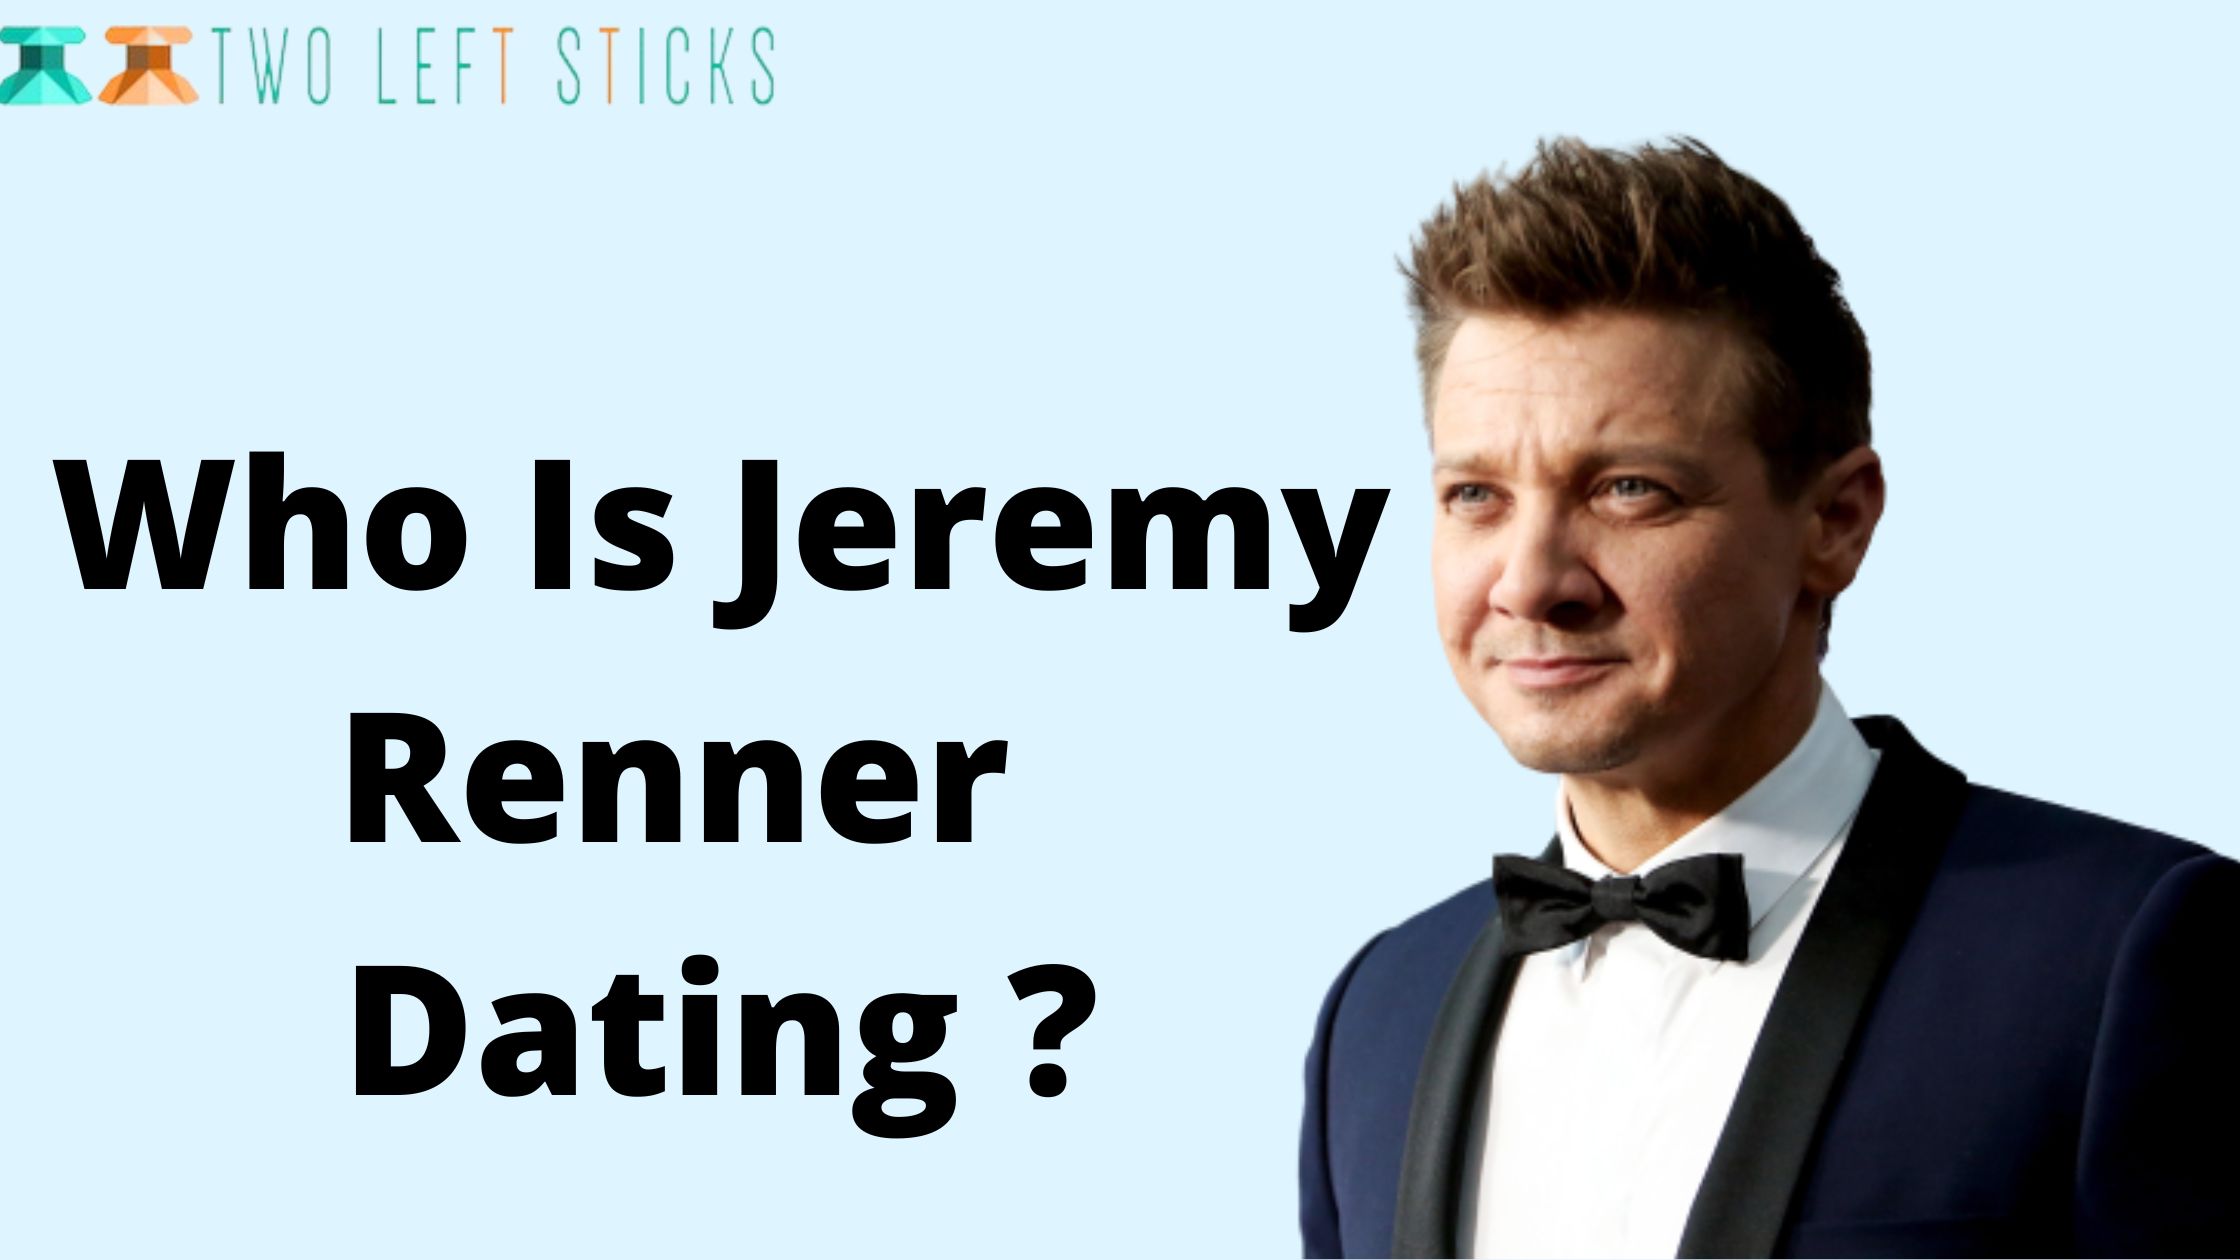 Jeremy-Renner-dating-twoleftsticks(1)